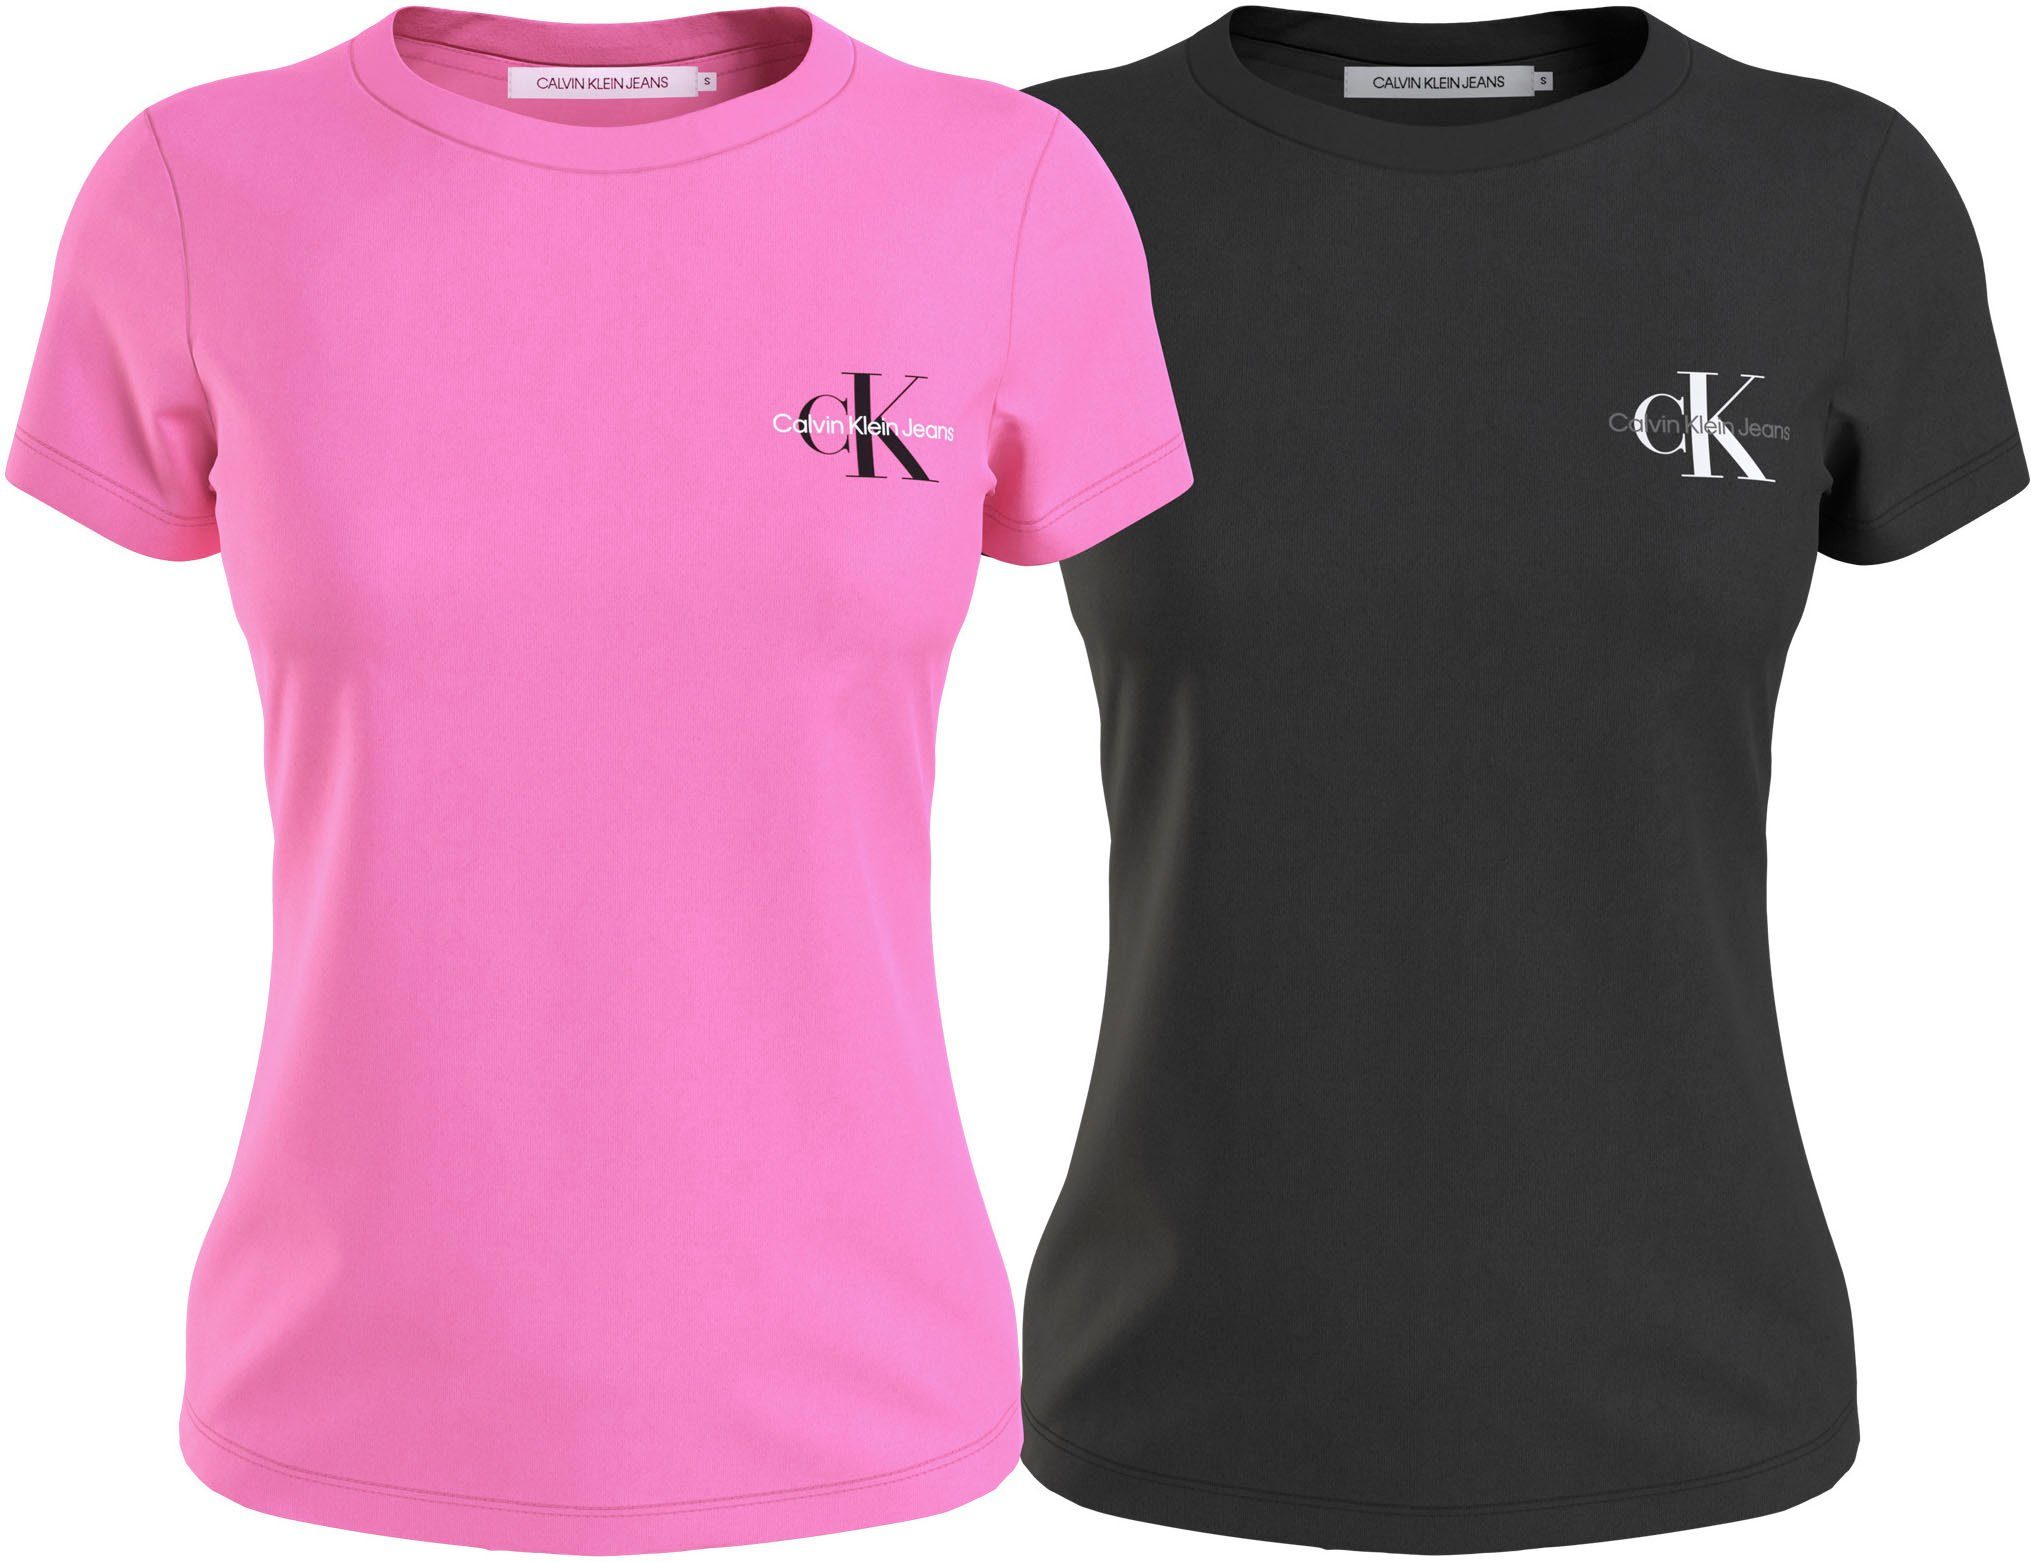 Rosa Damen T-Shirts kaufen » Pinke Damen T-Shirts | OTTO